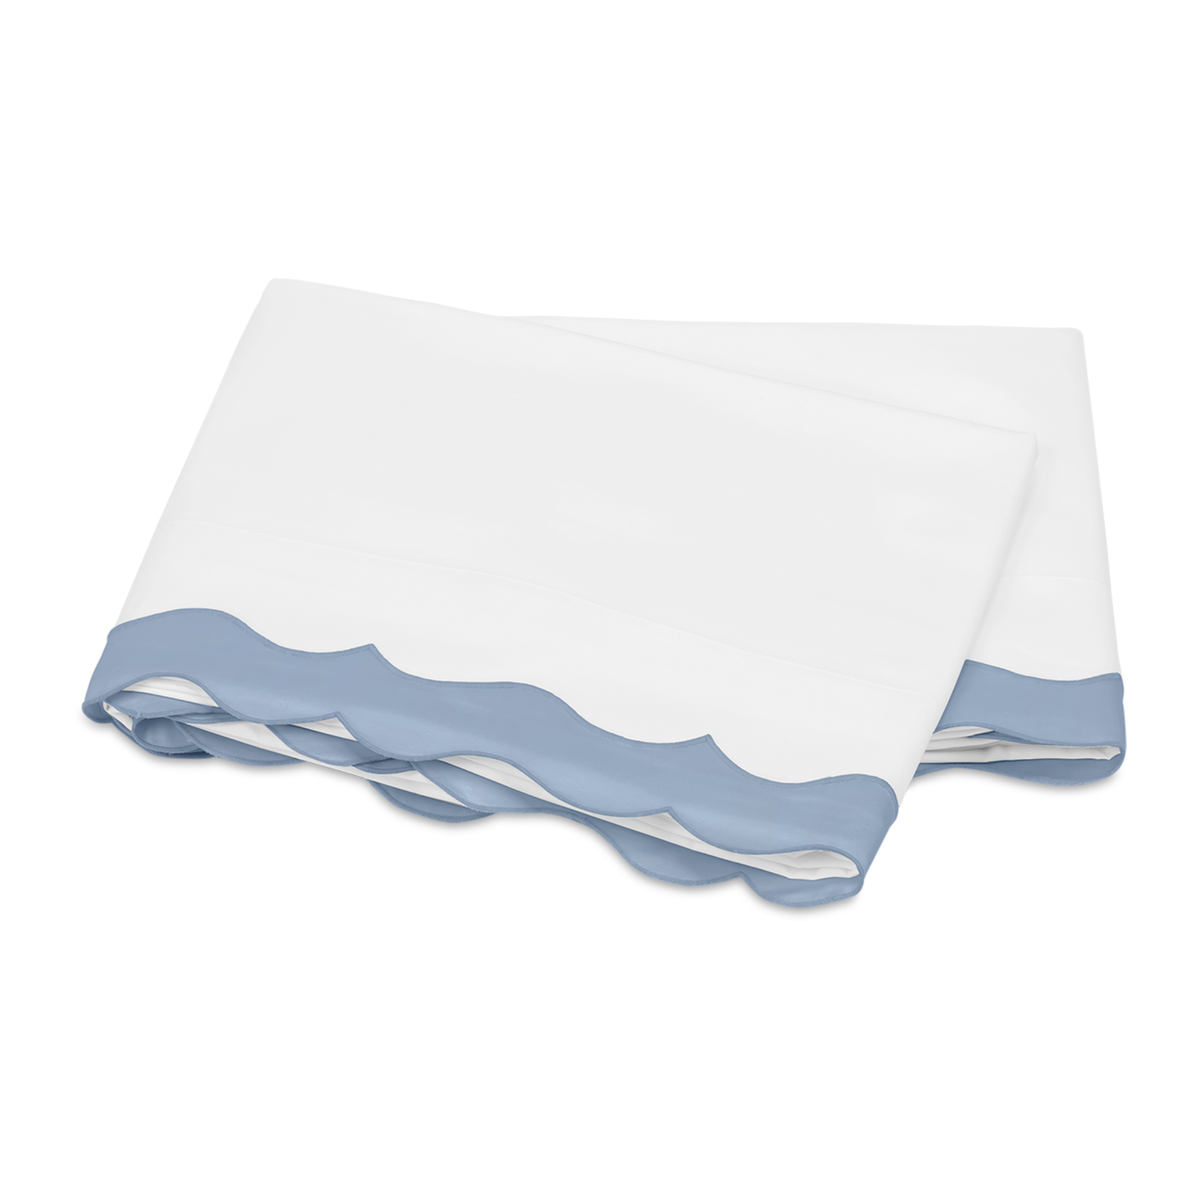 Folded Flat Sheet of Matouk Lorelei Bedding in Hazy Blue Color